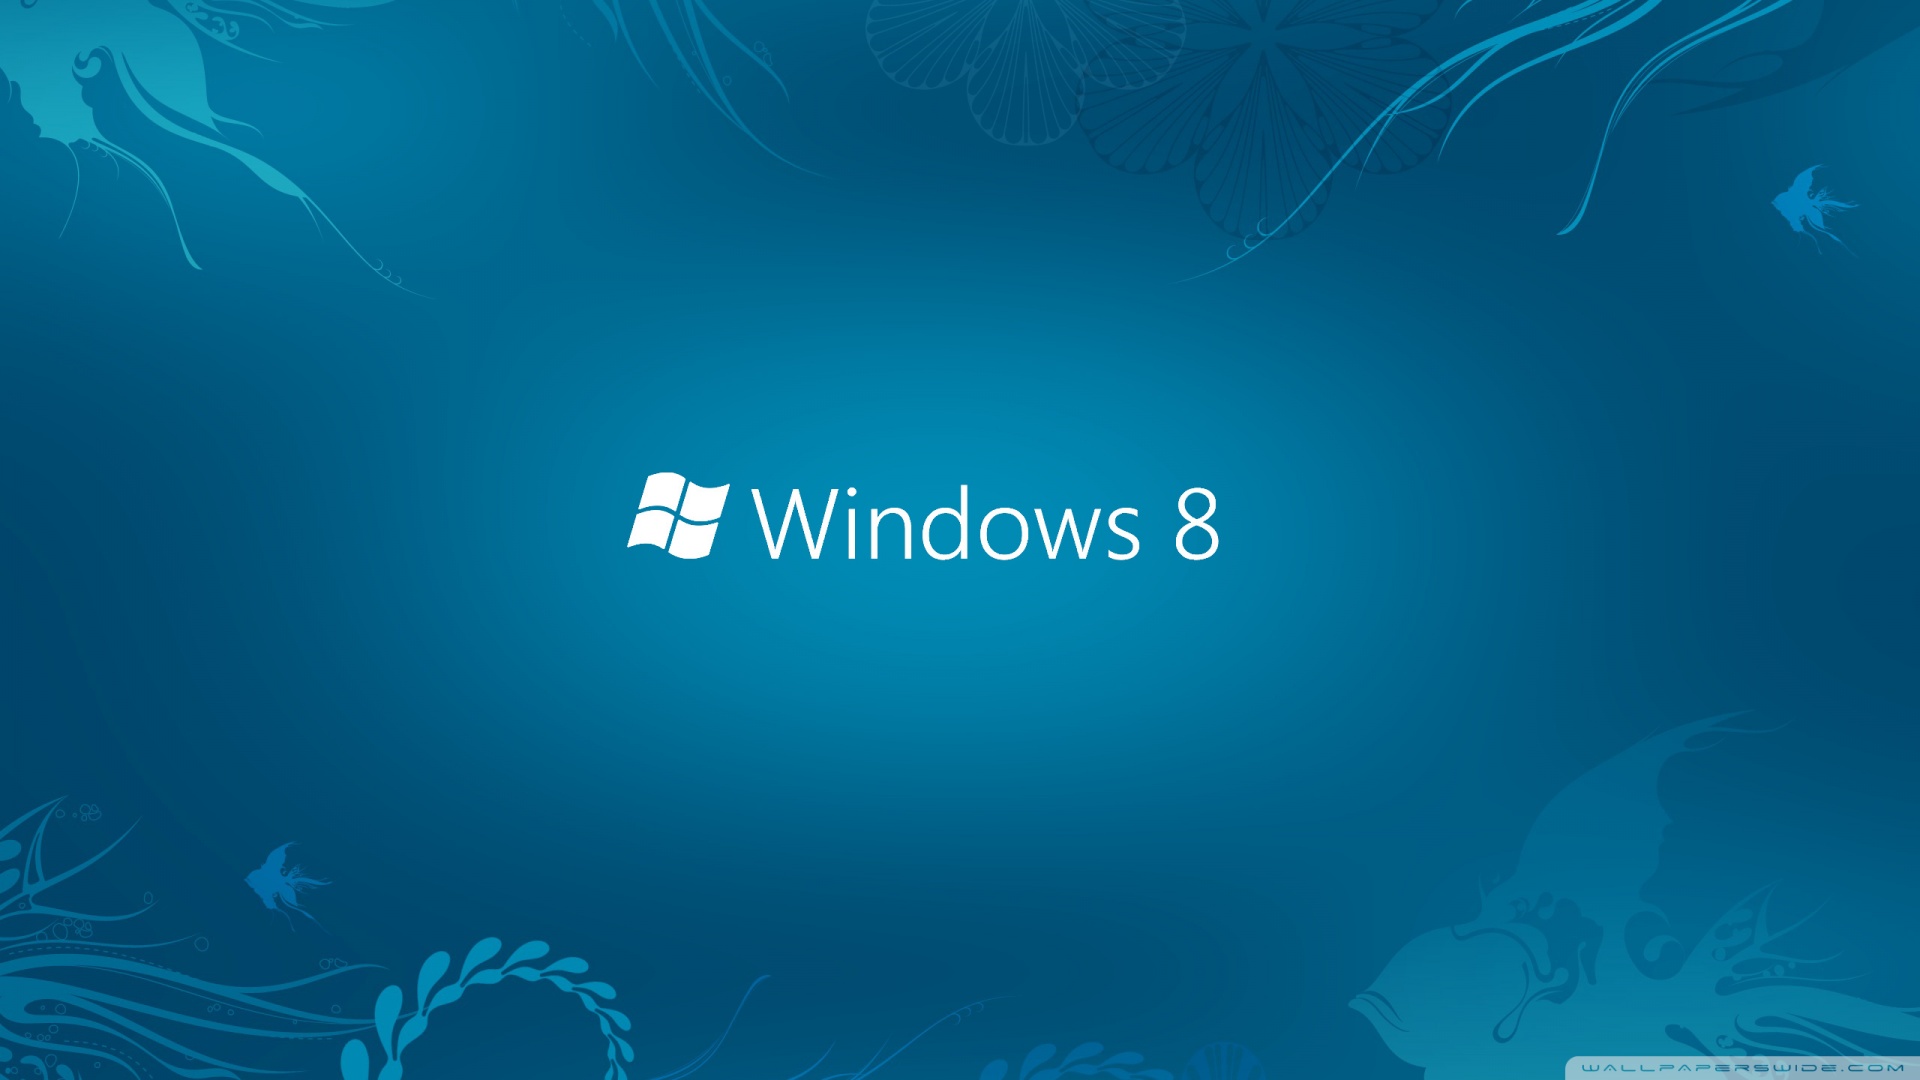 Free download 20 Widescreen HD Wallpapers For Windows 8 Desktop